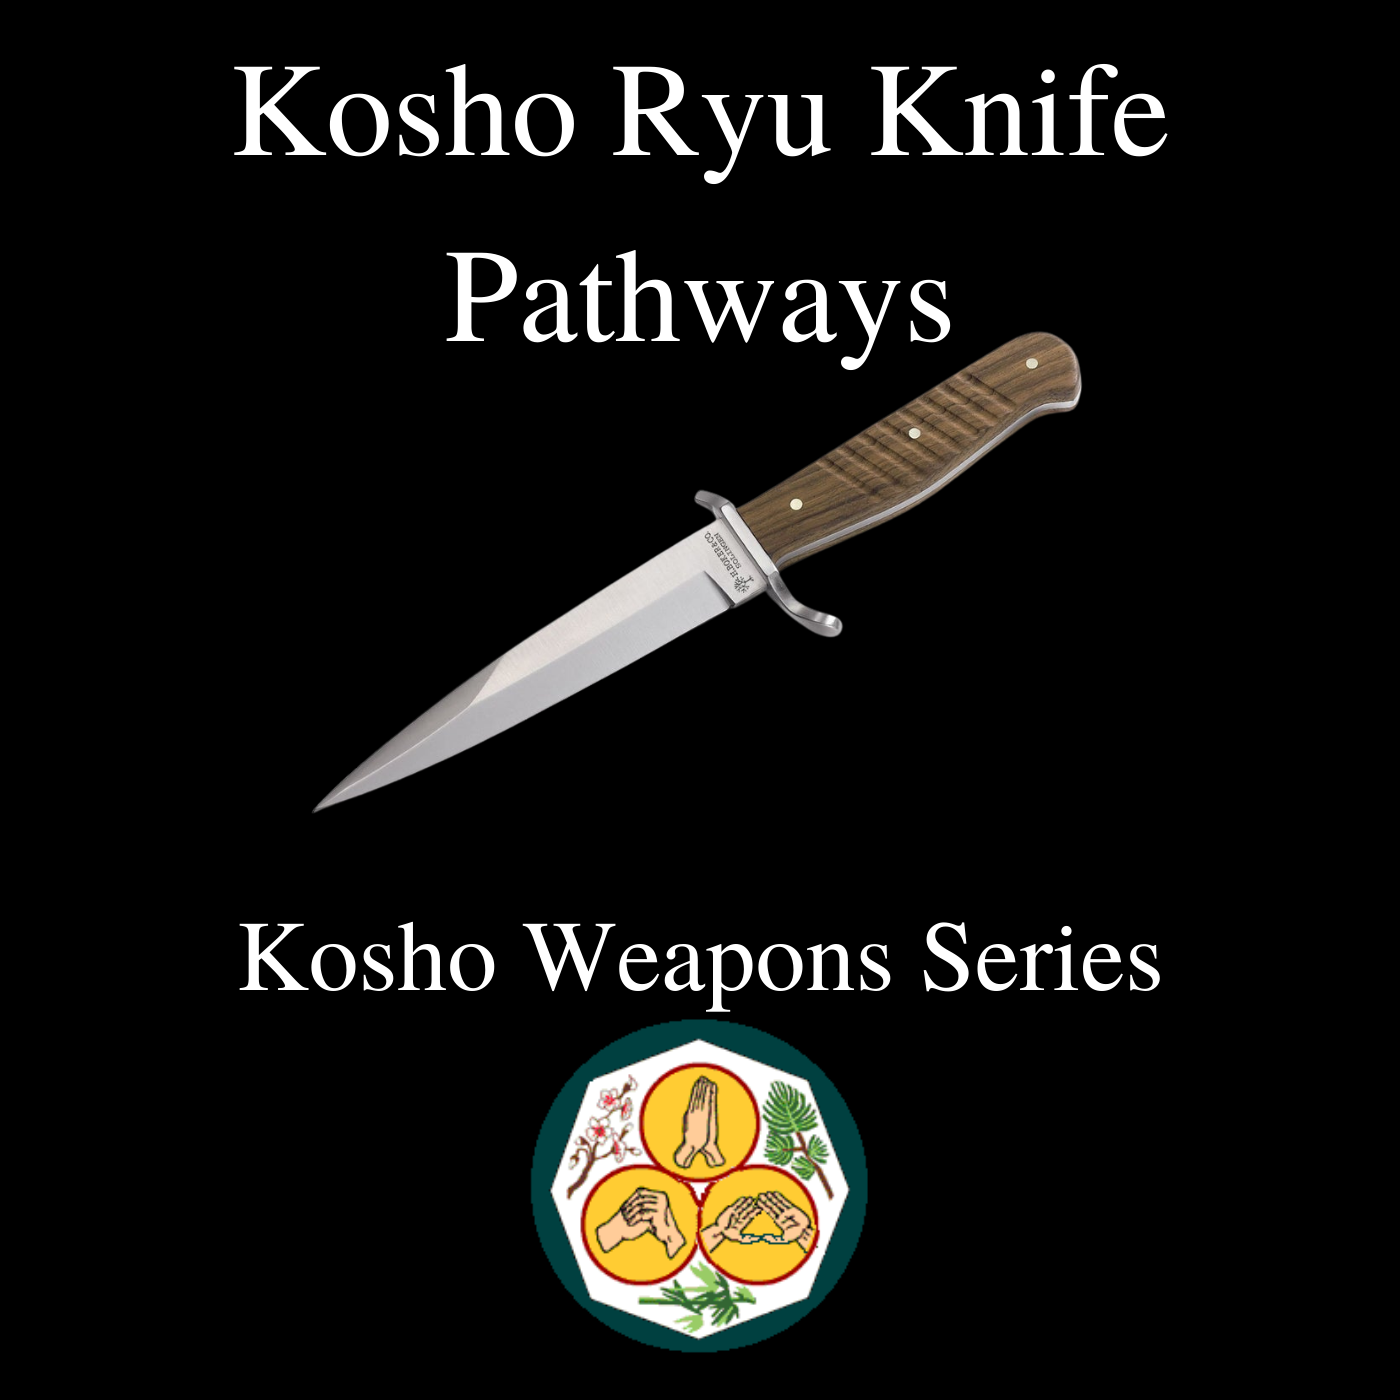 * Kosho Ryu Knife Pathways